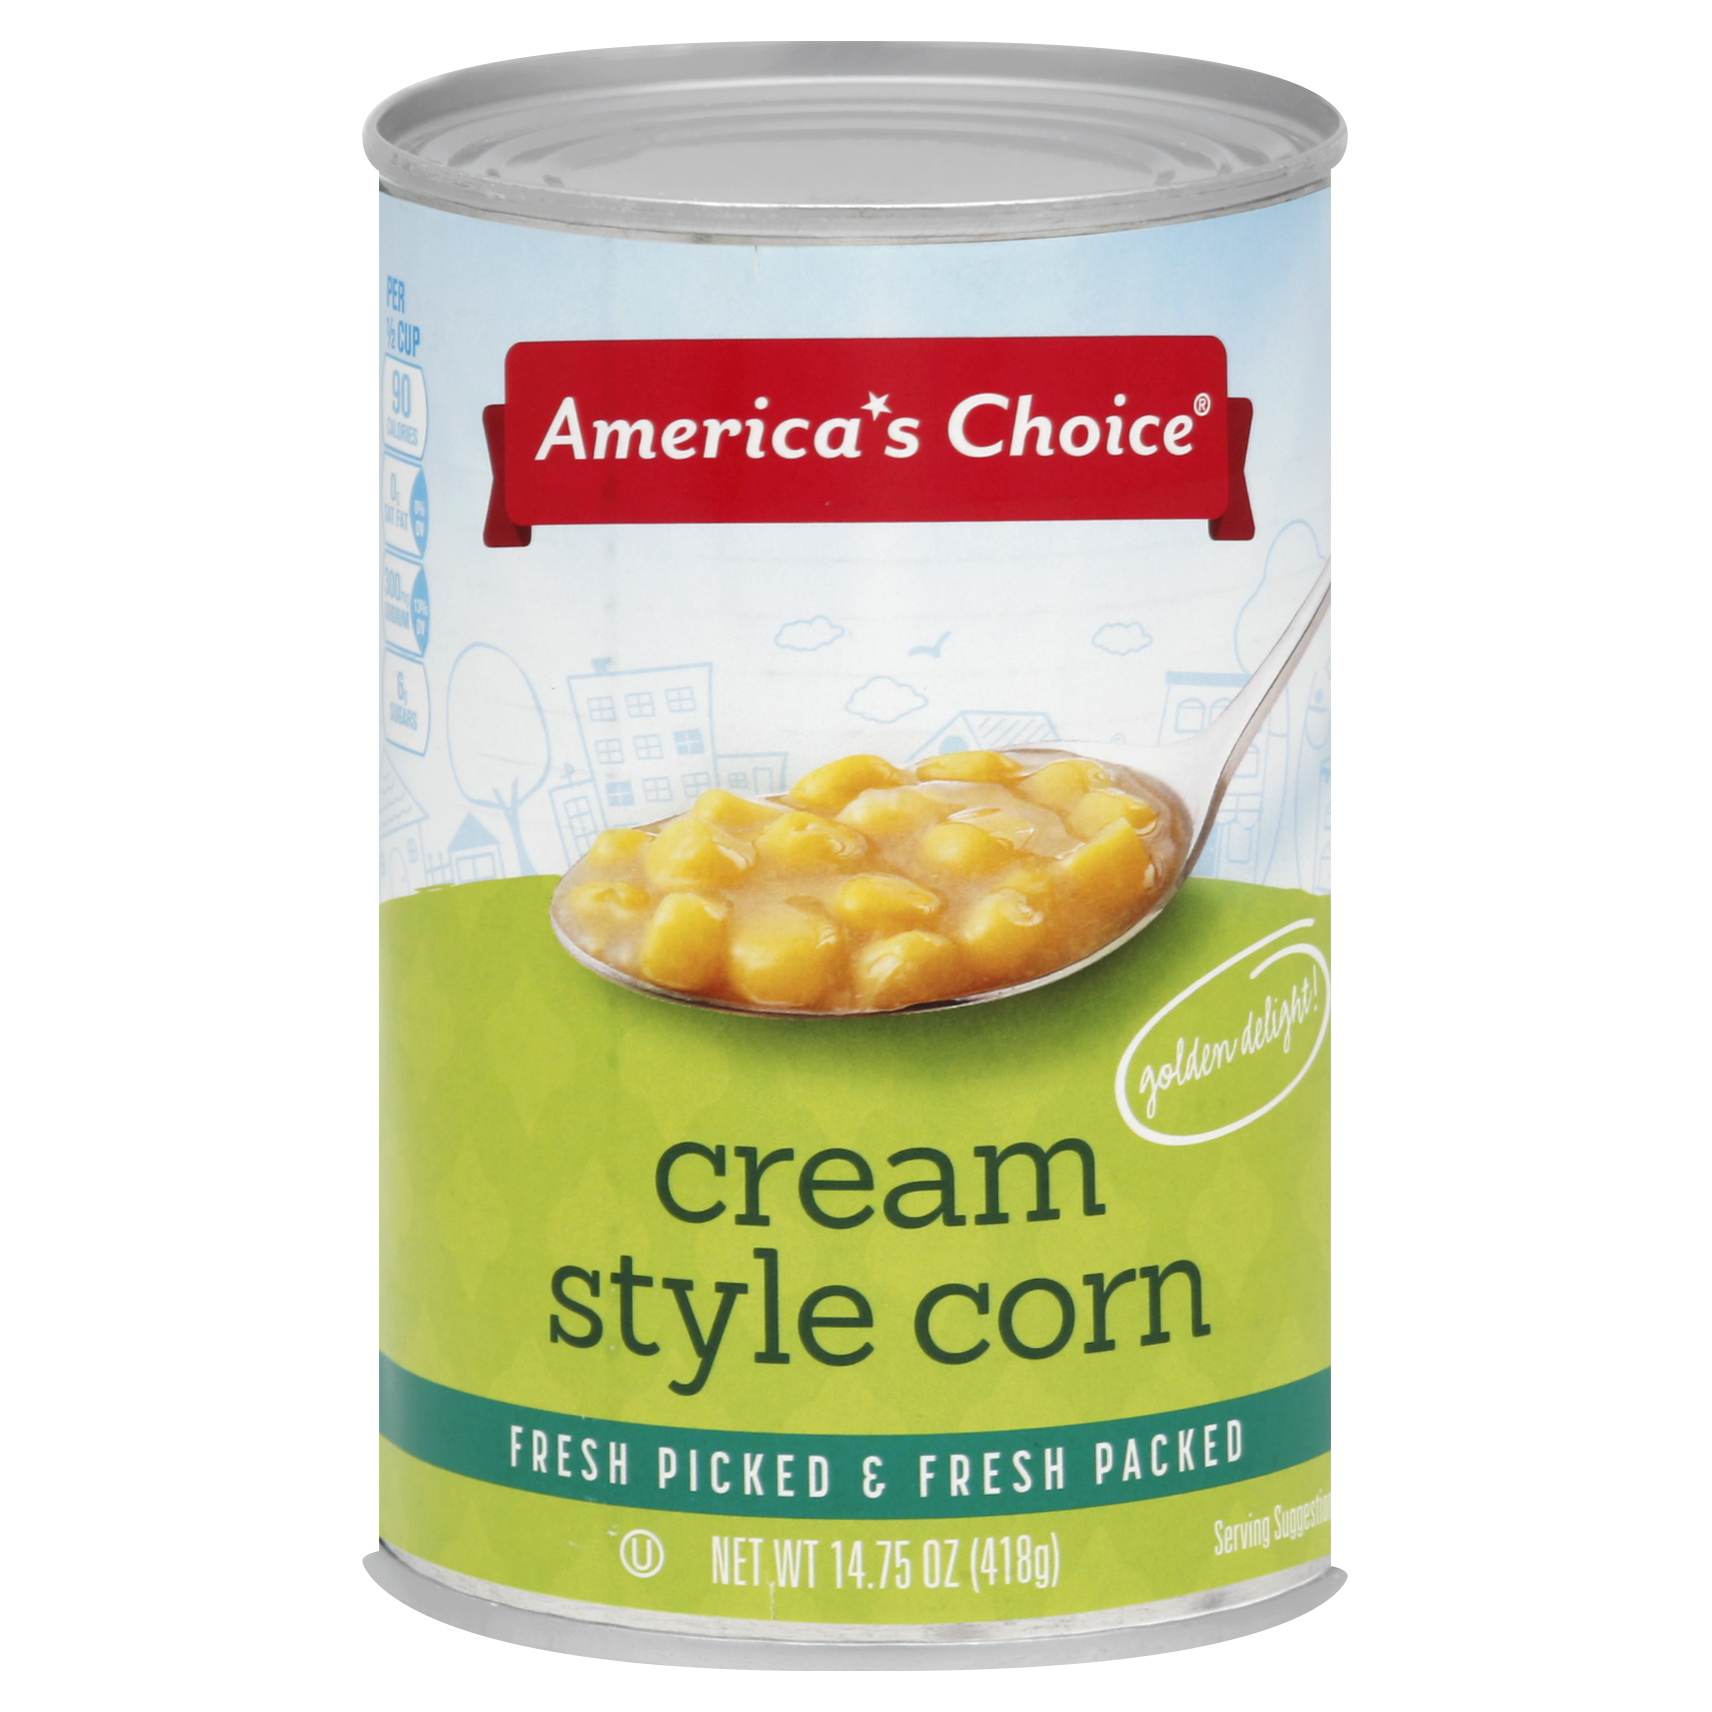 America's Choice Corn 14.75 Oz image